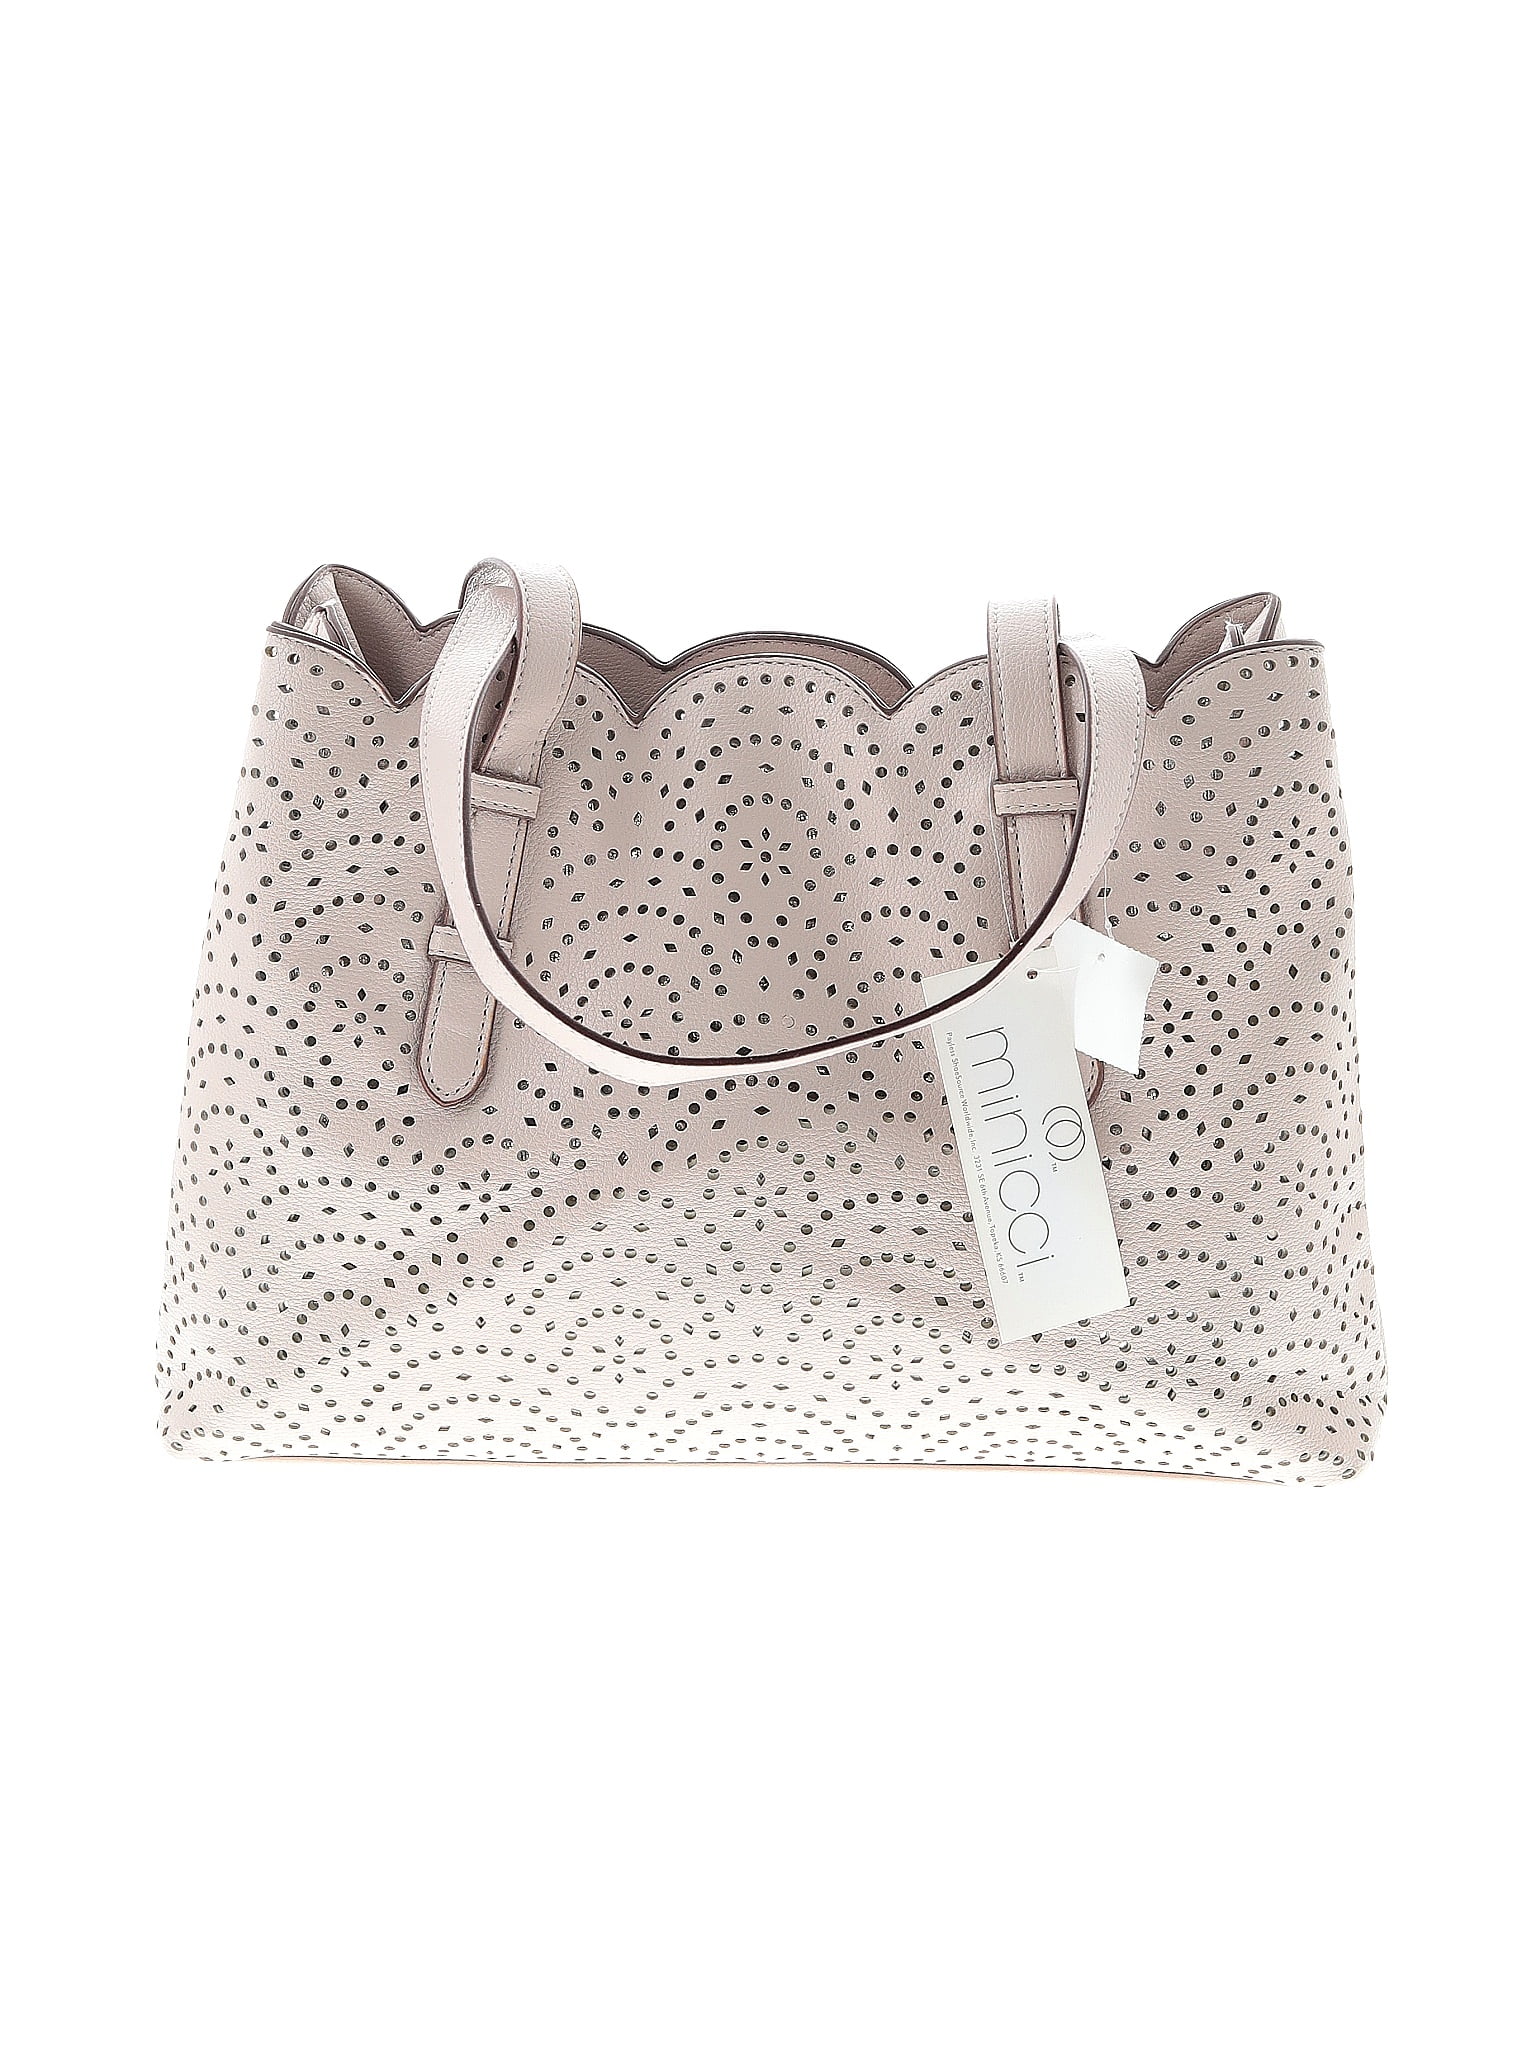 Minicci Silver Shoulder Bag One Size - 50% off | thredUP